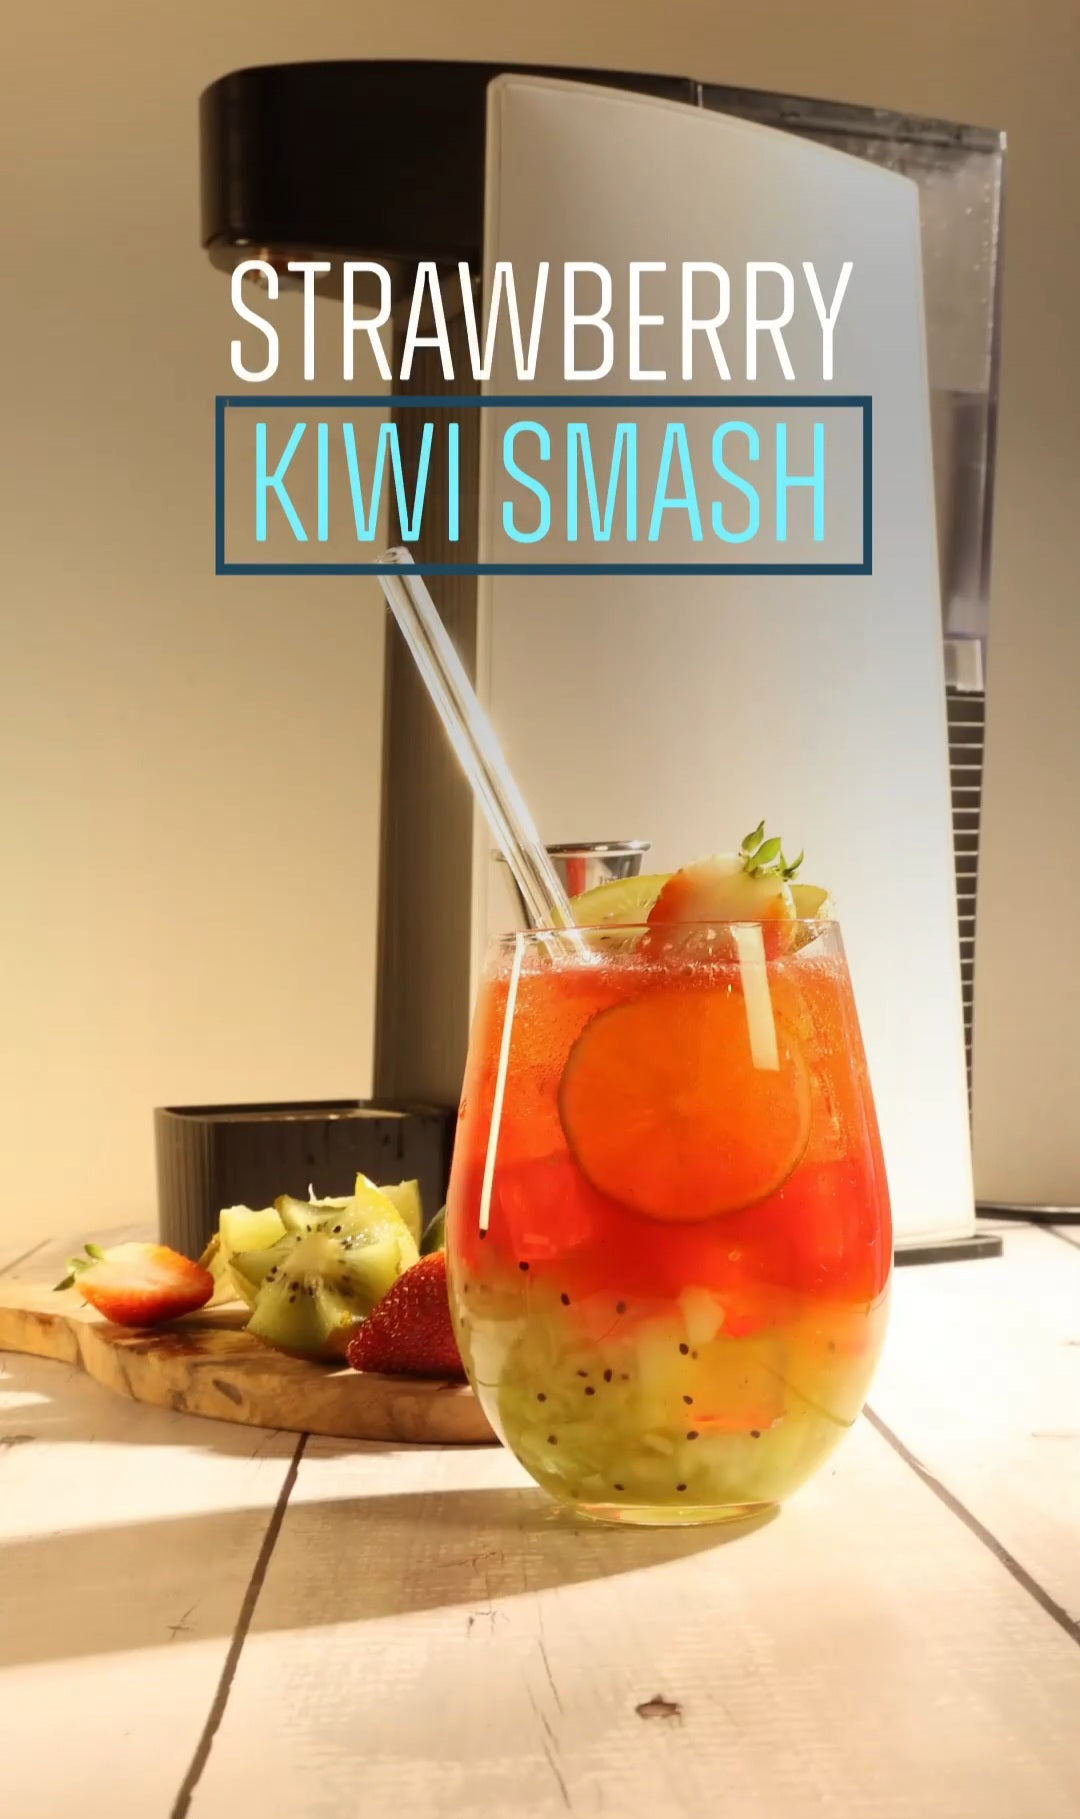 Strawberry Kiwi smash⁠